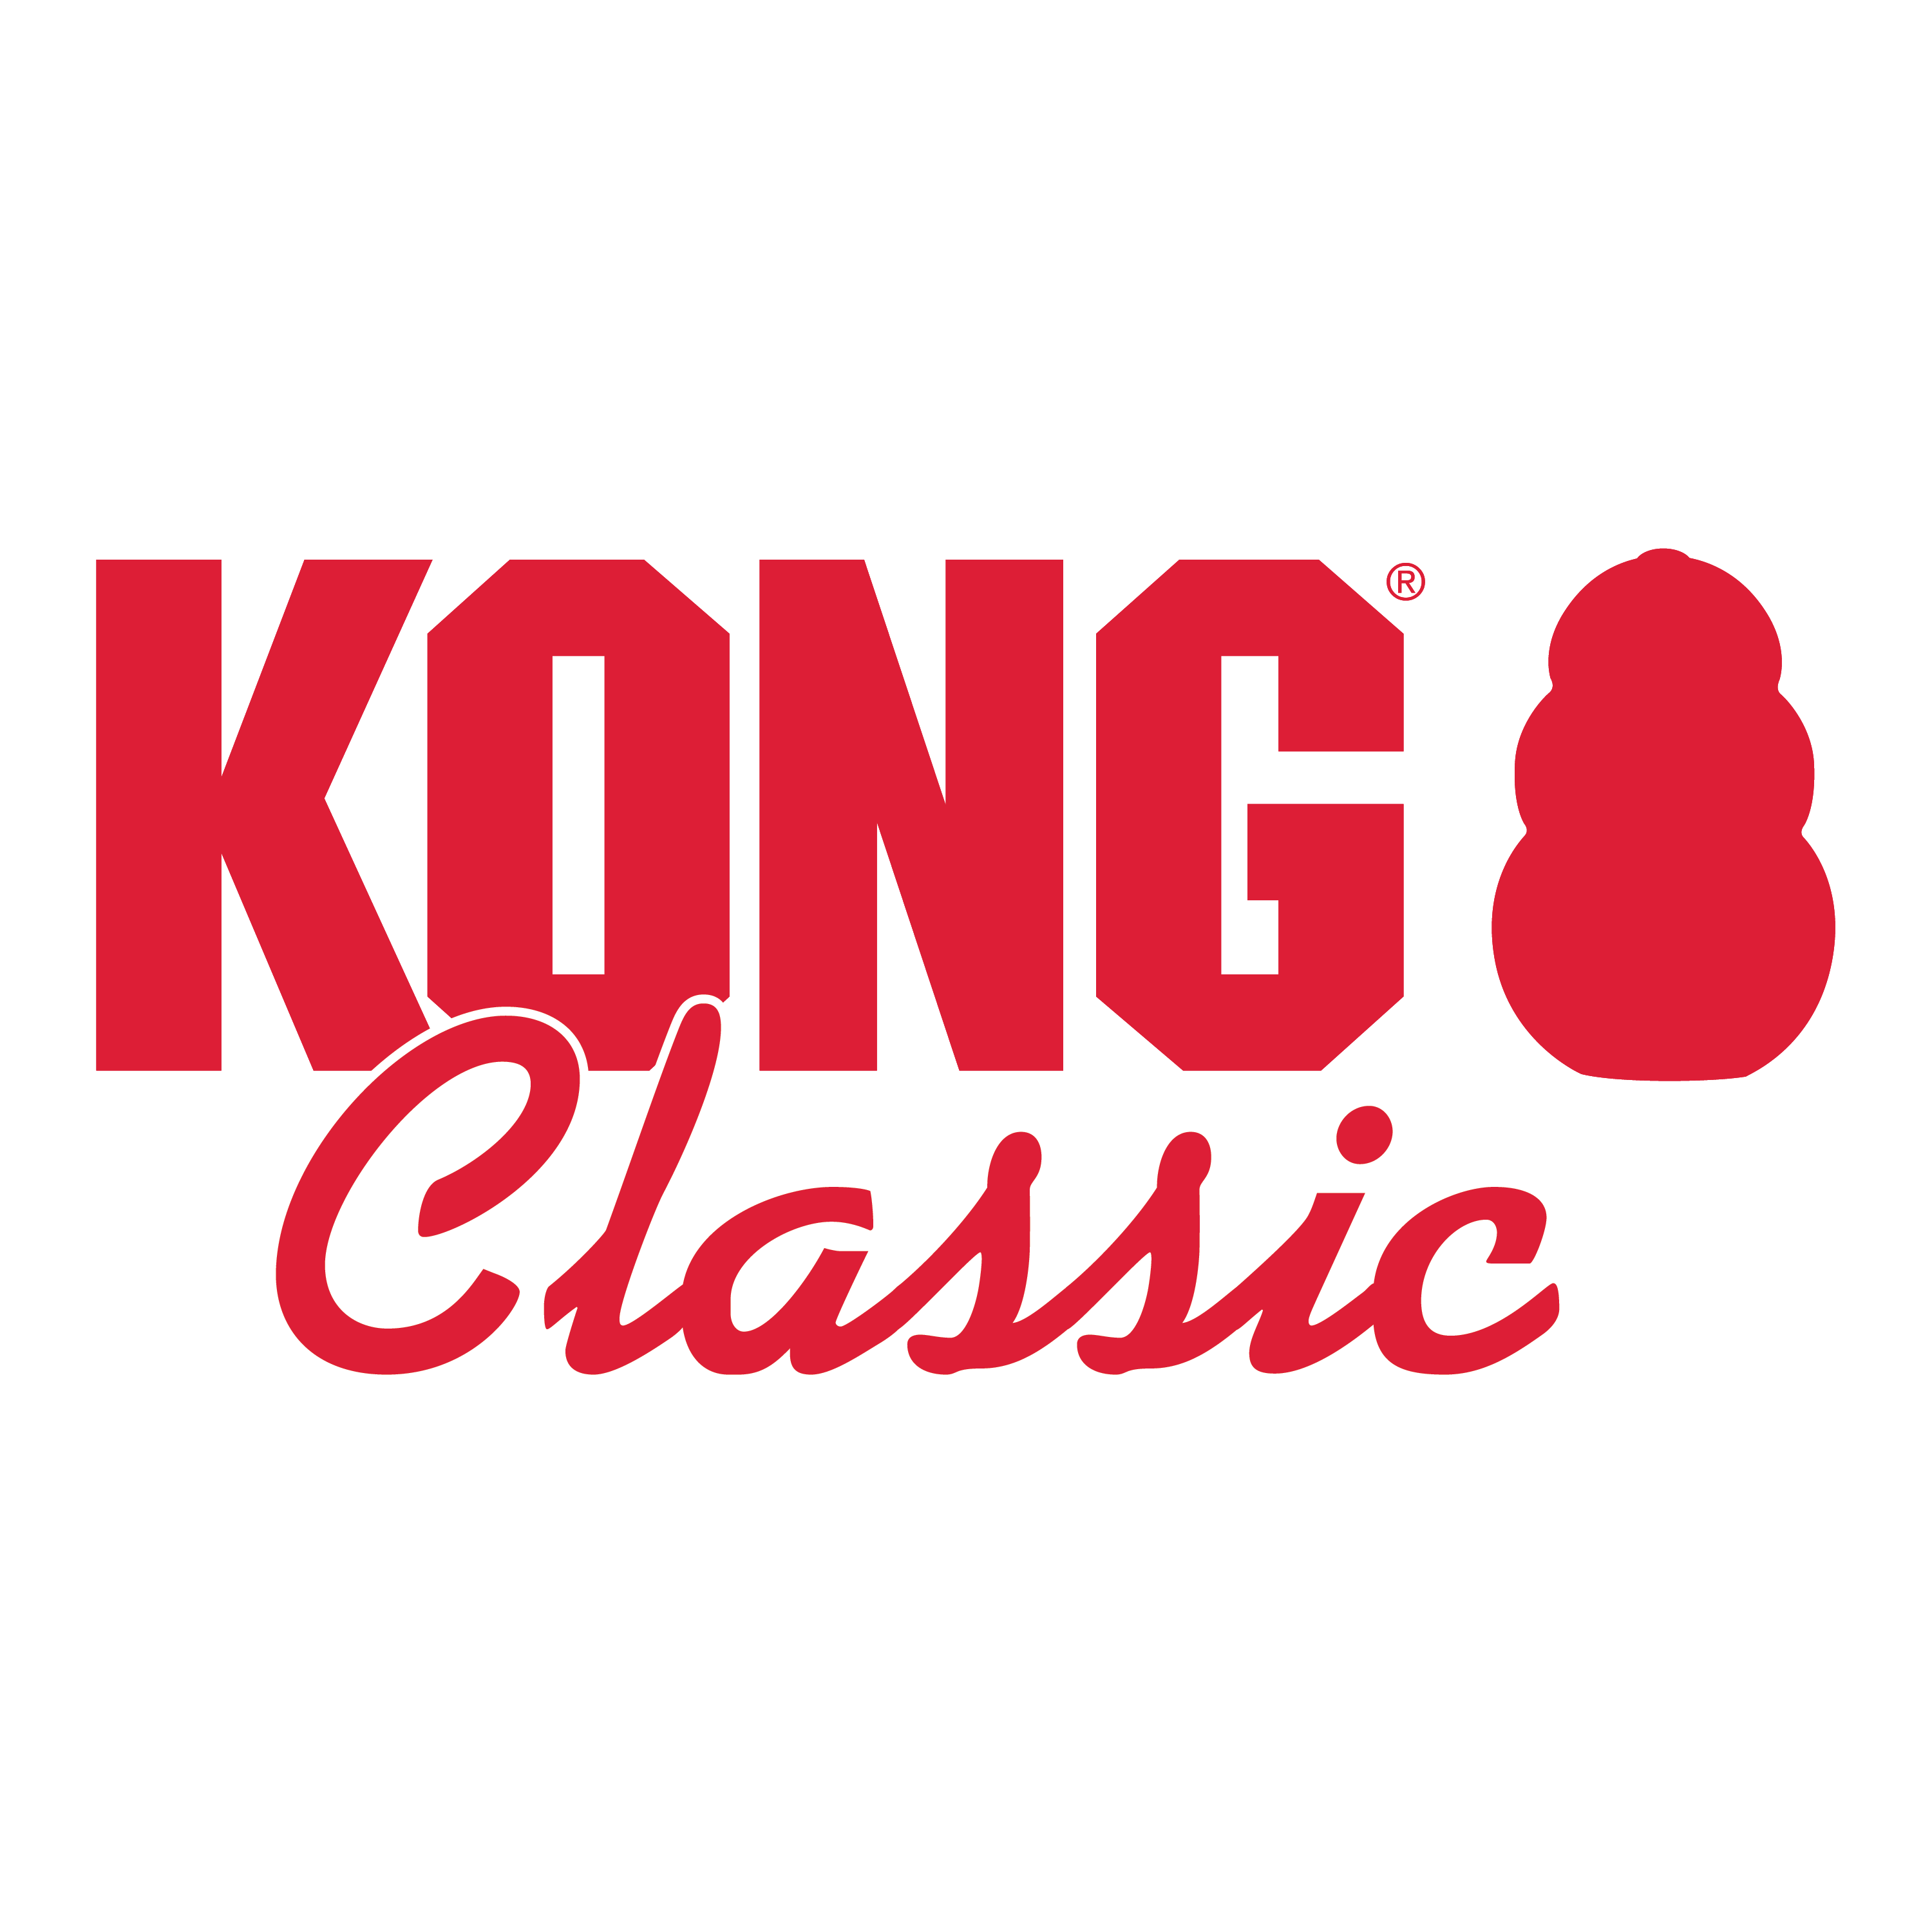 KONG Classic alt1 product image